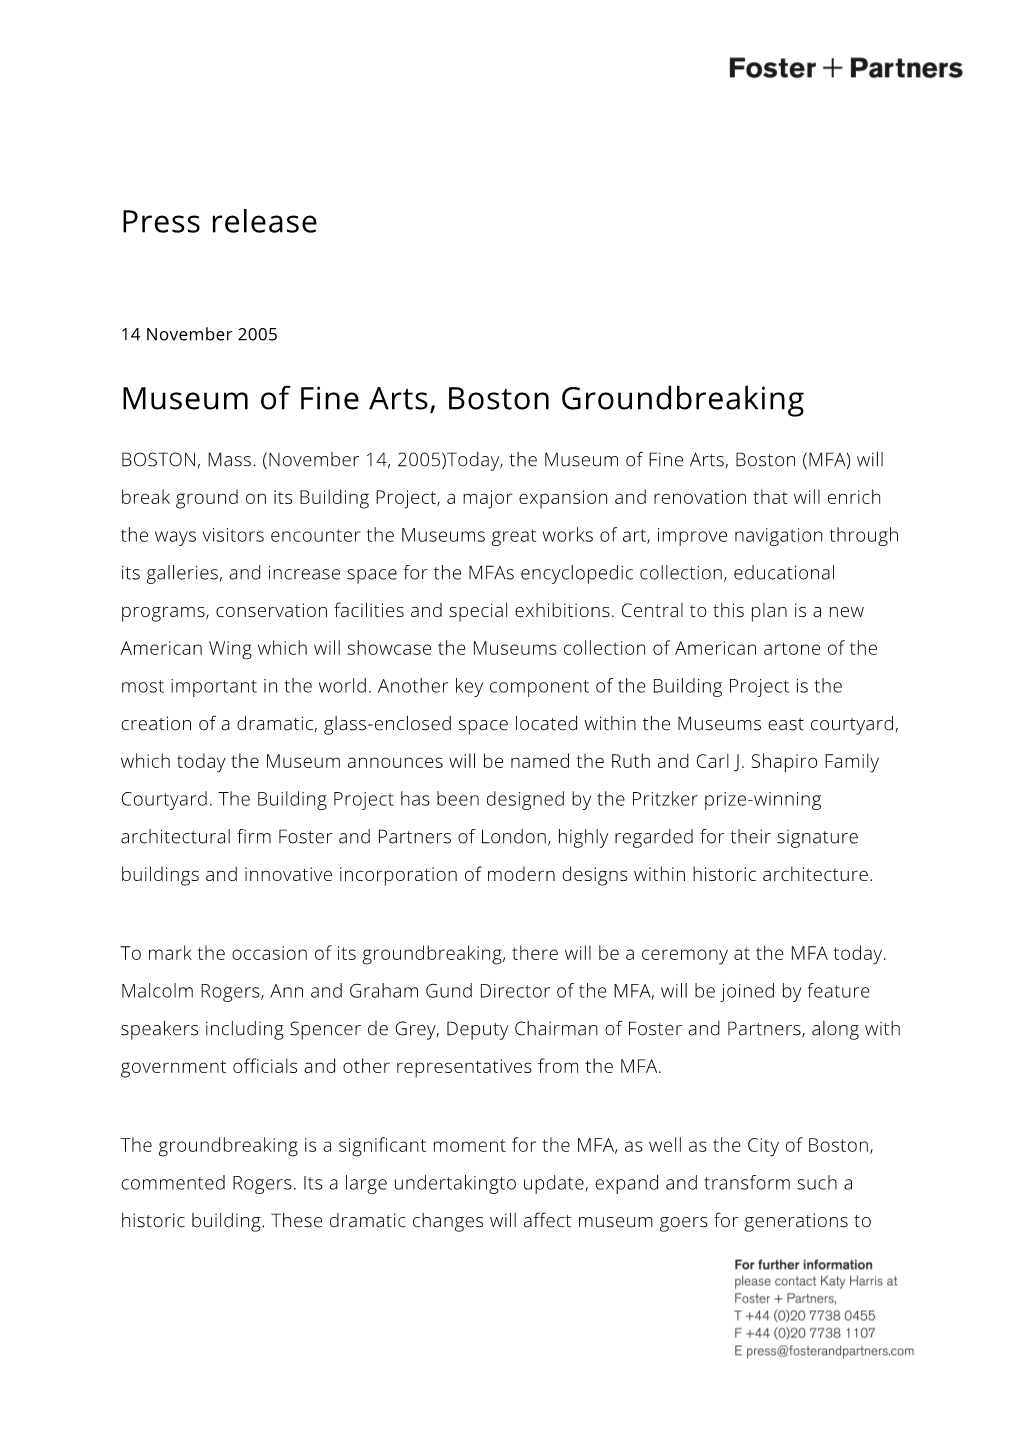 Press Release Museum of Fine Arts, Boston Groundbreaking